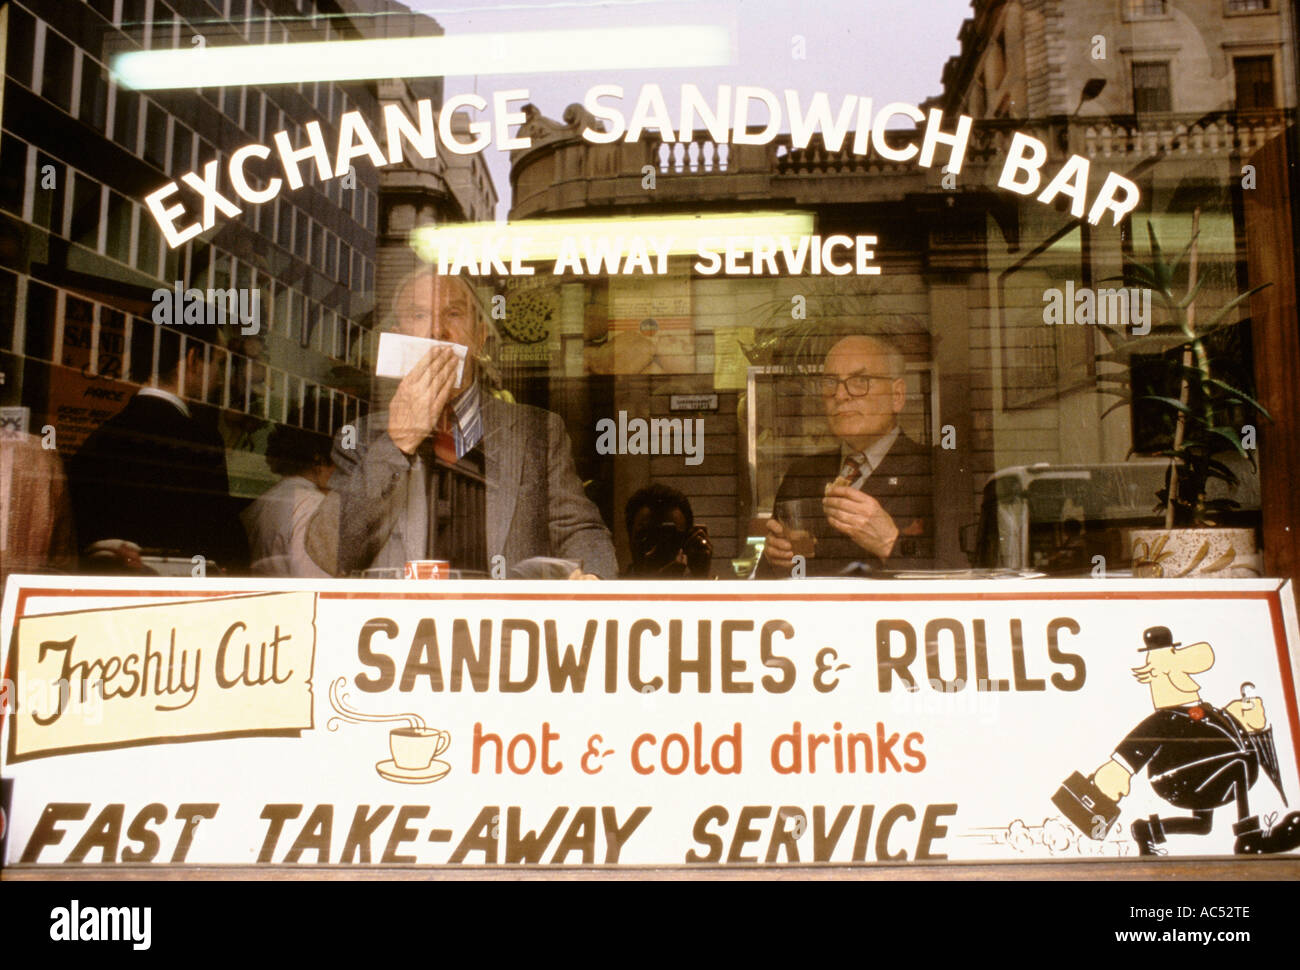 EXCHANGE SANDWICH BAR CITY OF LONDON Stock Photo